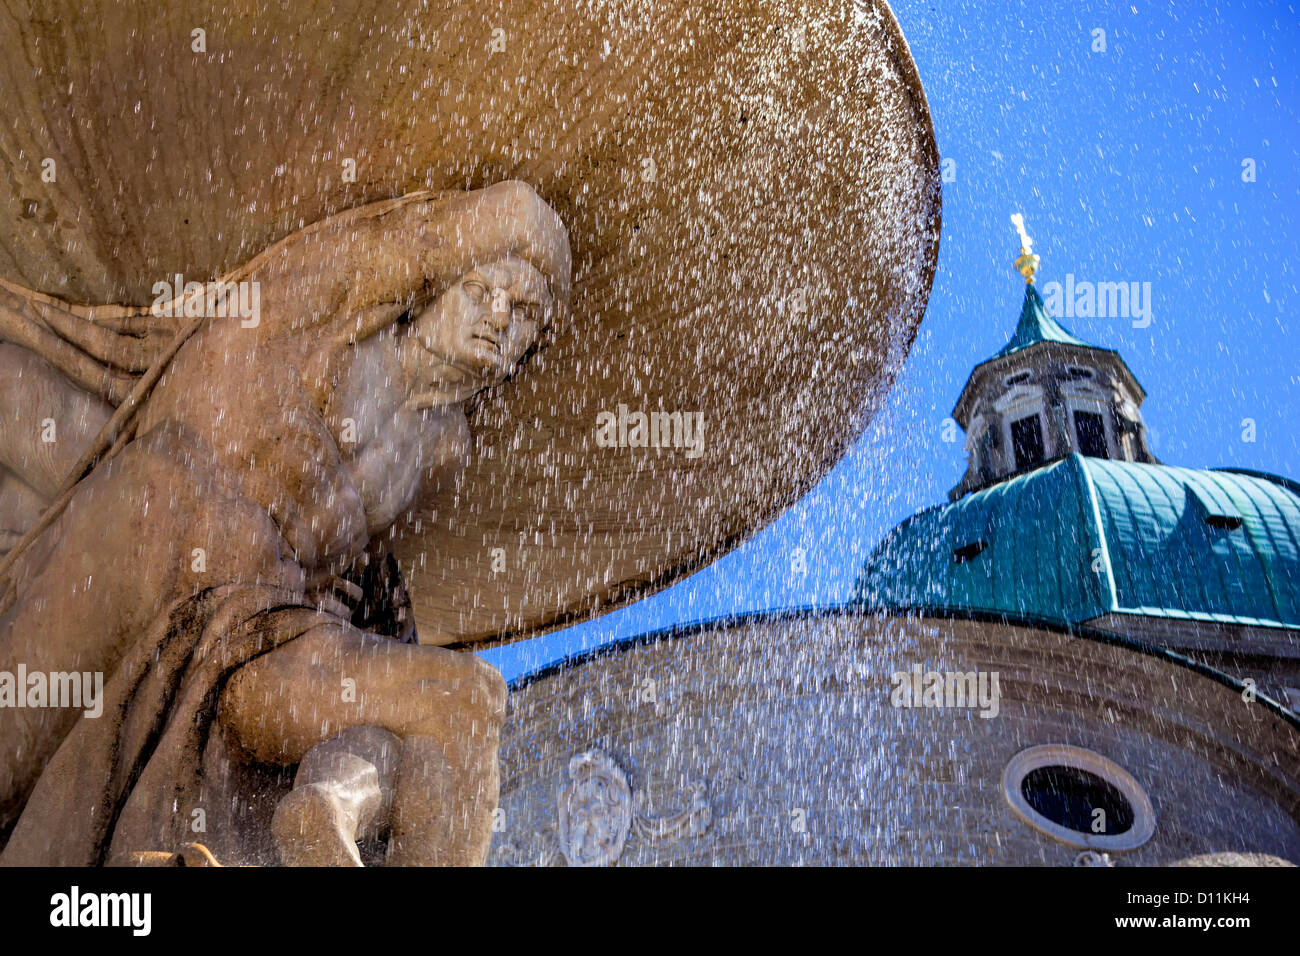 Austria, Salzburg, View of statue, Salzburg Cathedral in background Stock Photo